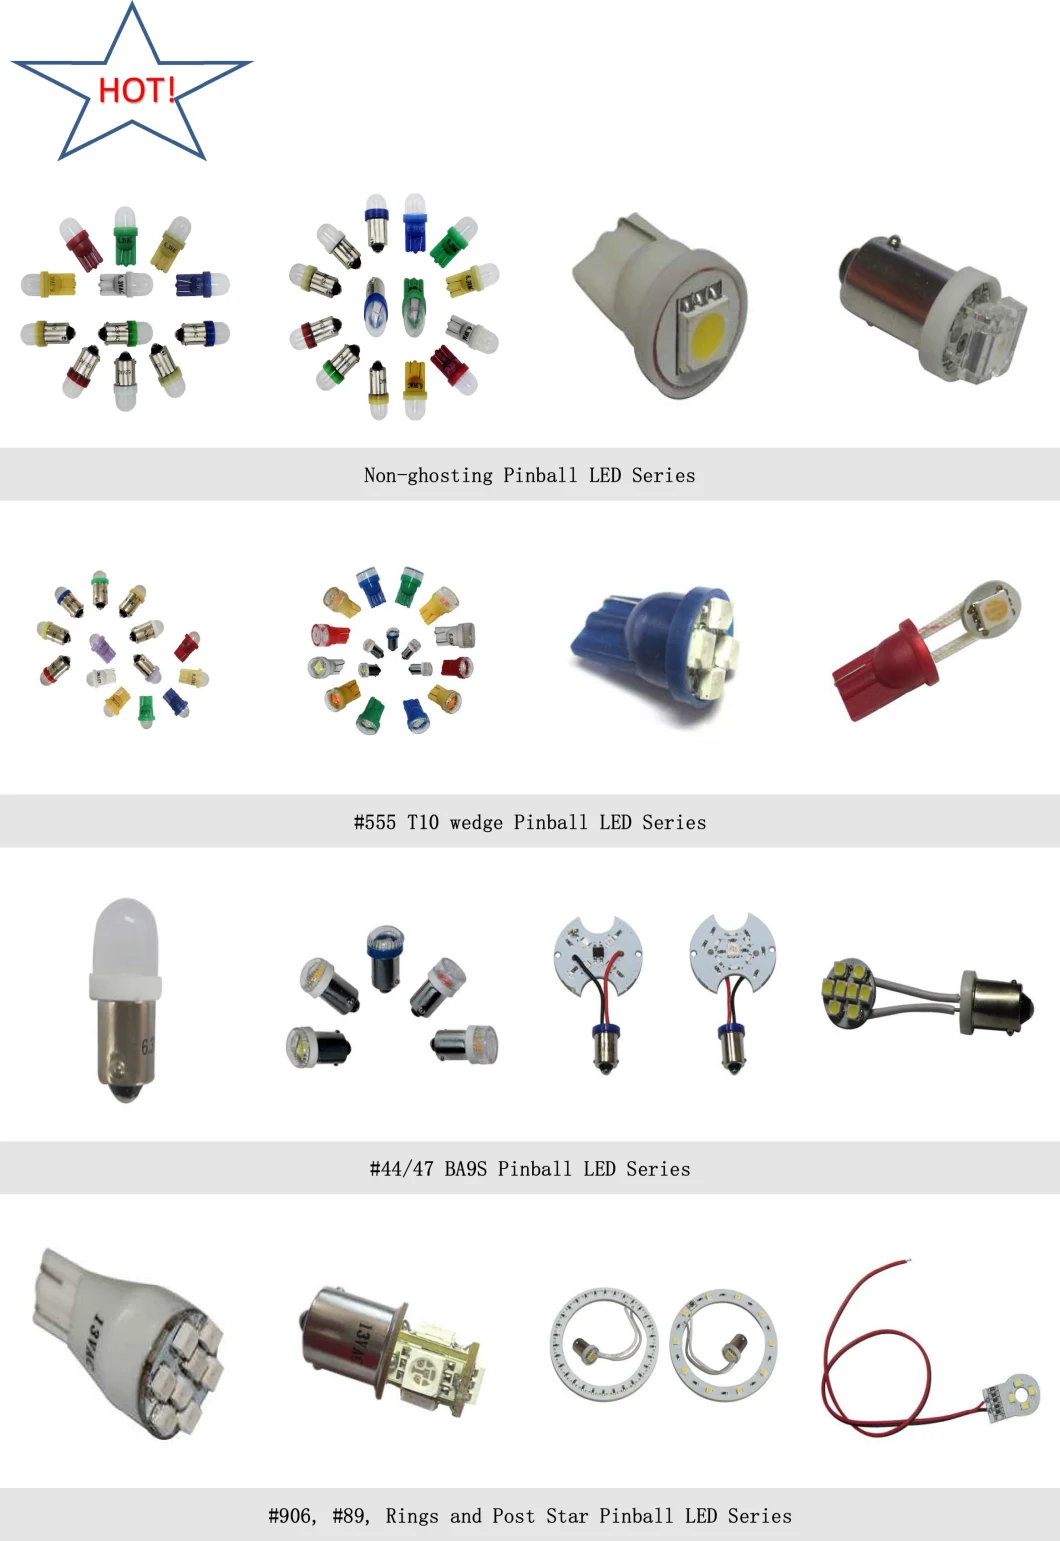 LED S8 E17 Light Bulb, LED St26 Indicator Light for Refrigerator, LED E17 for Europe Marketing